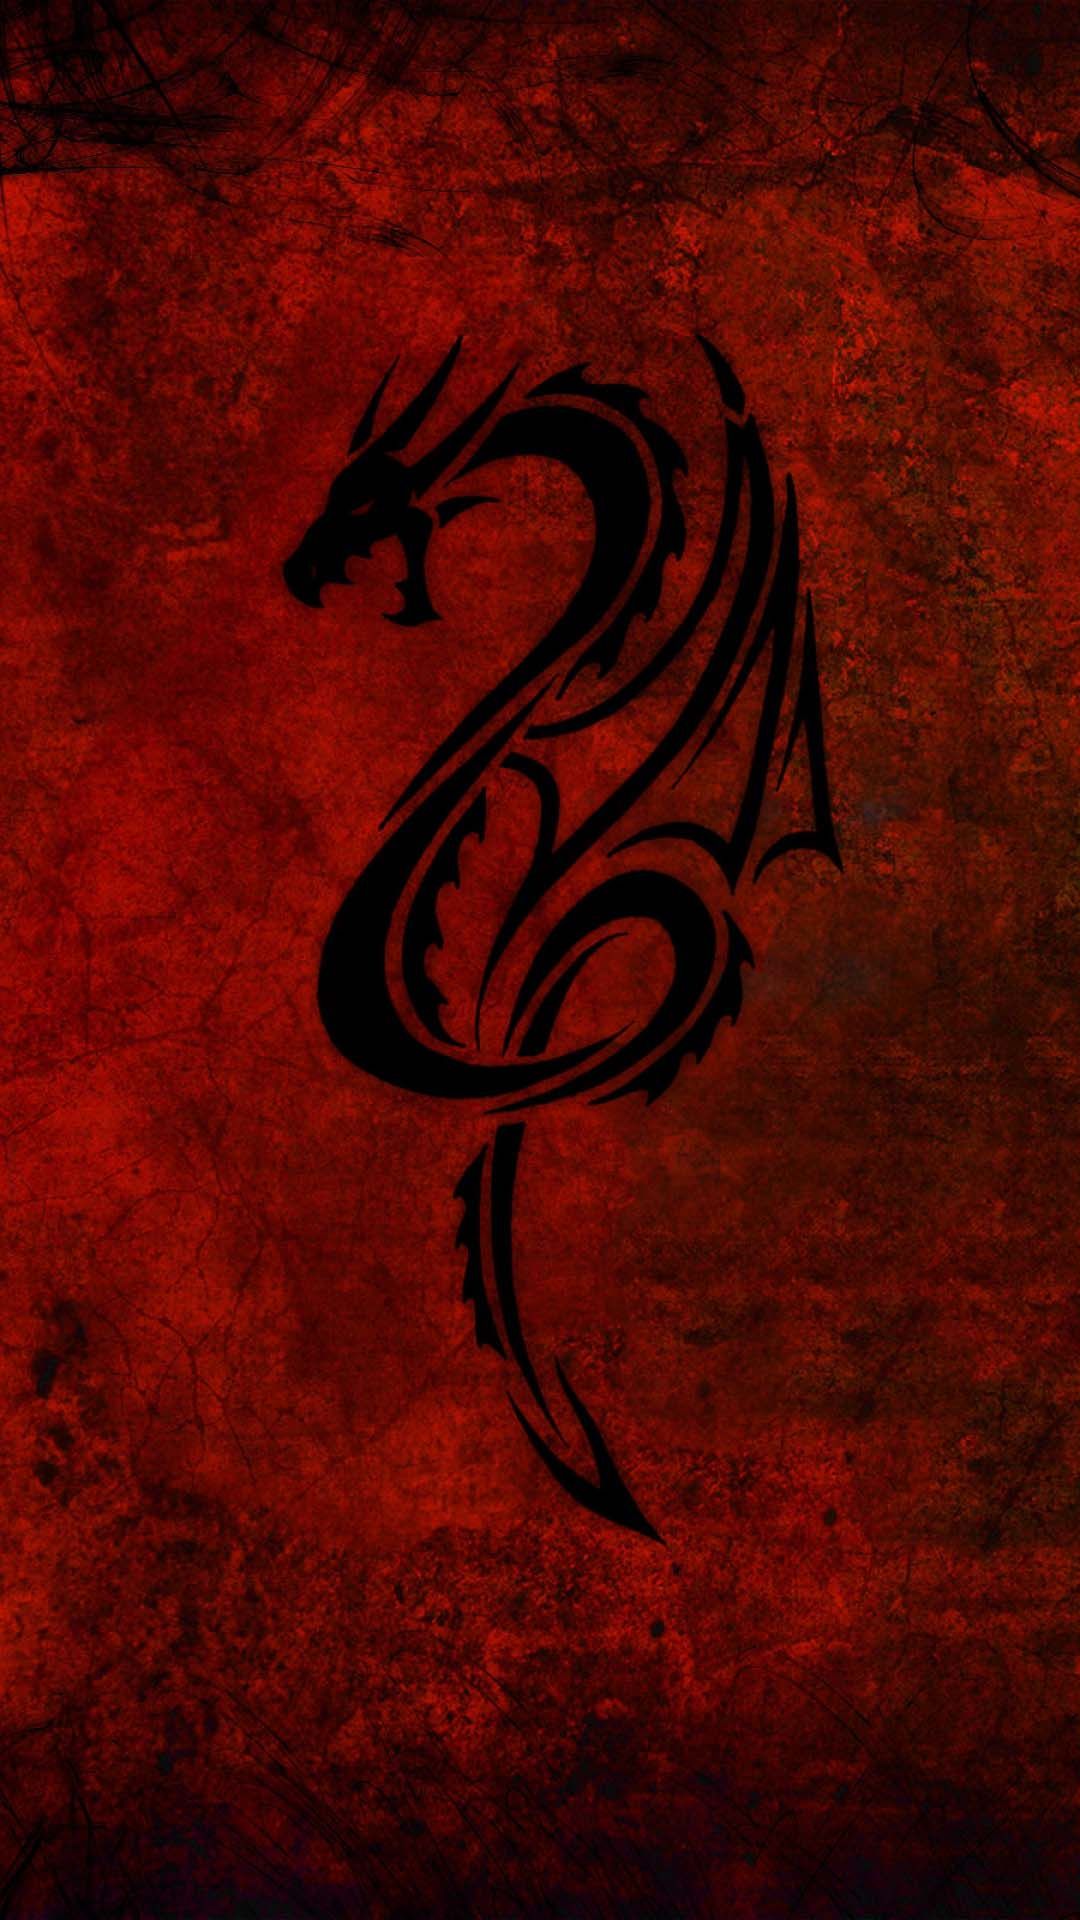 Wallpaper. Dragon wallpaper iphone